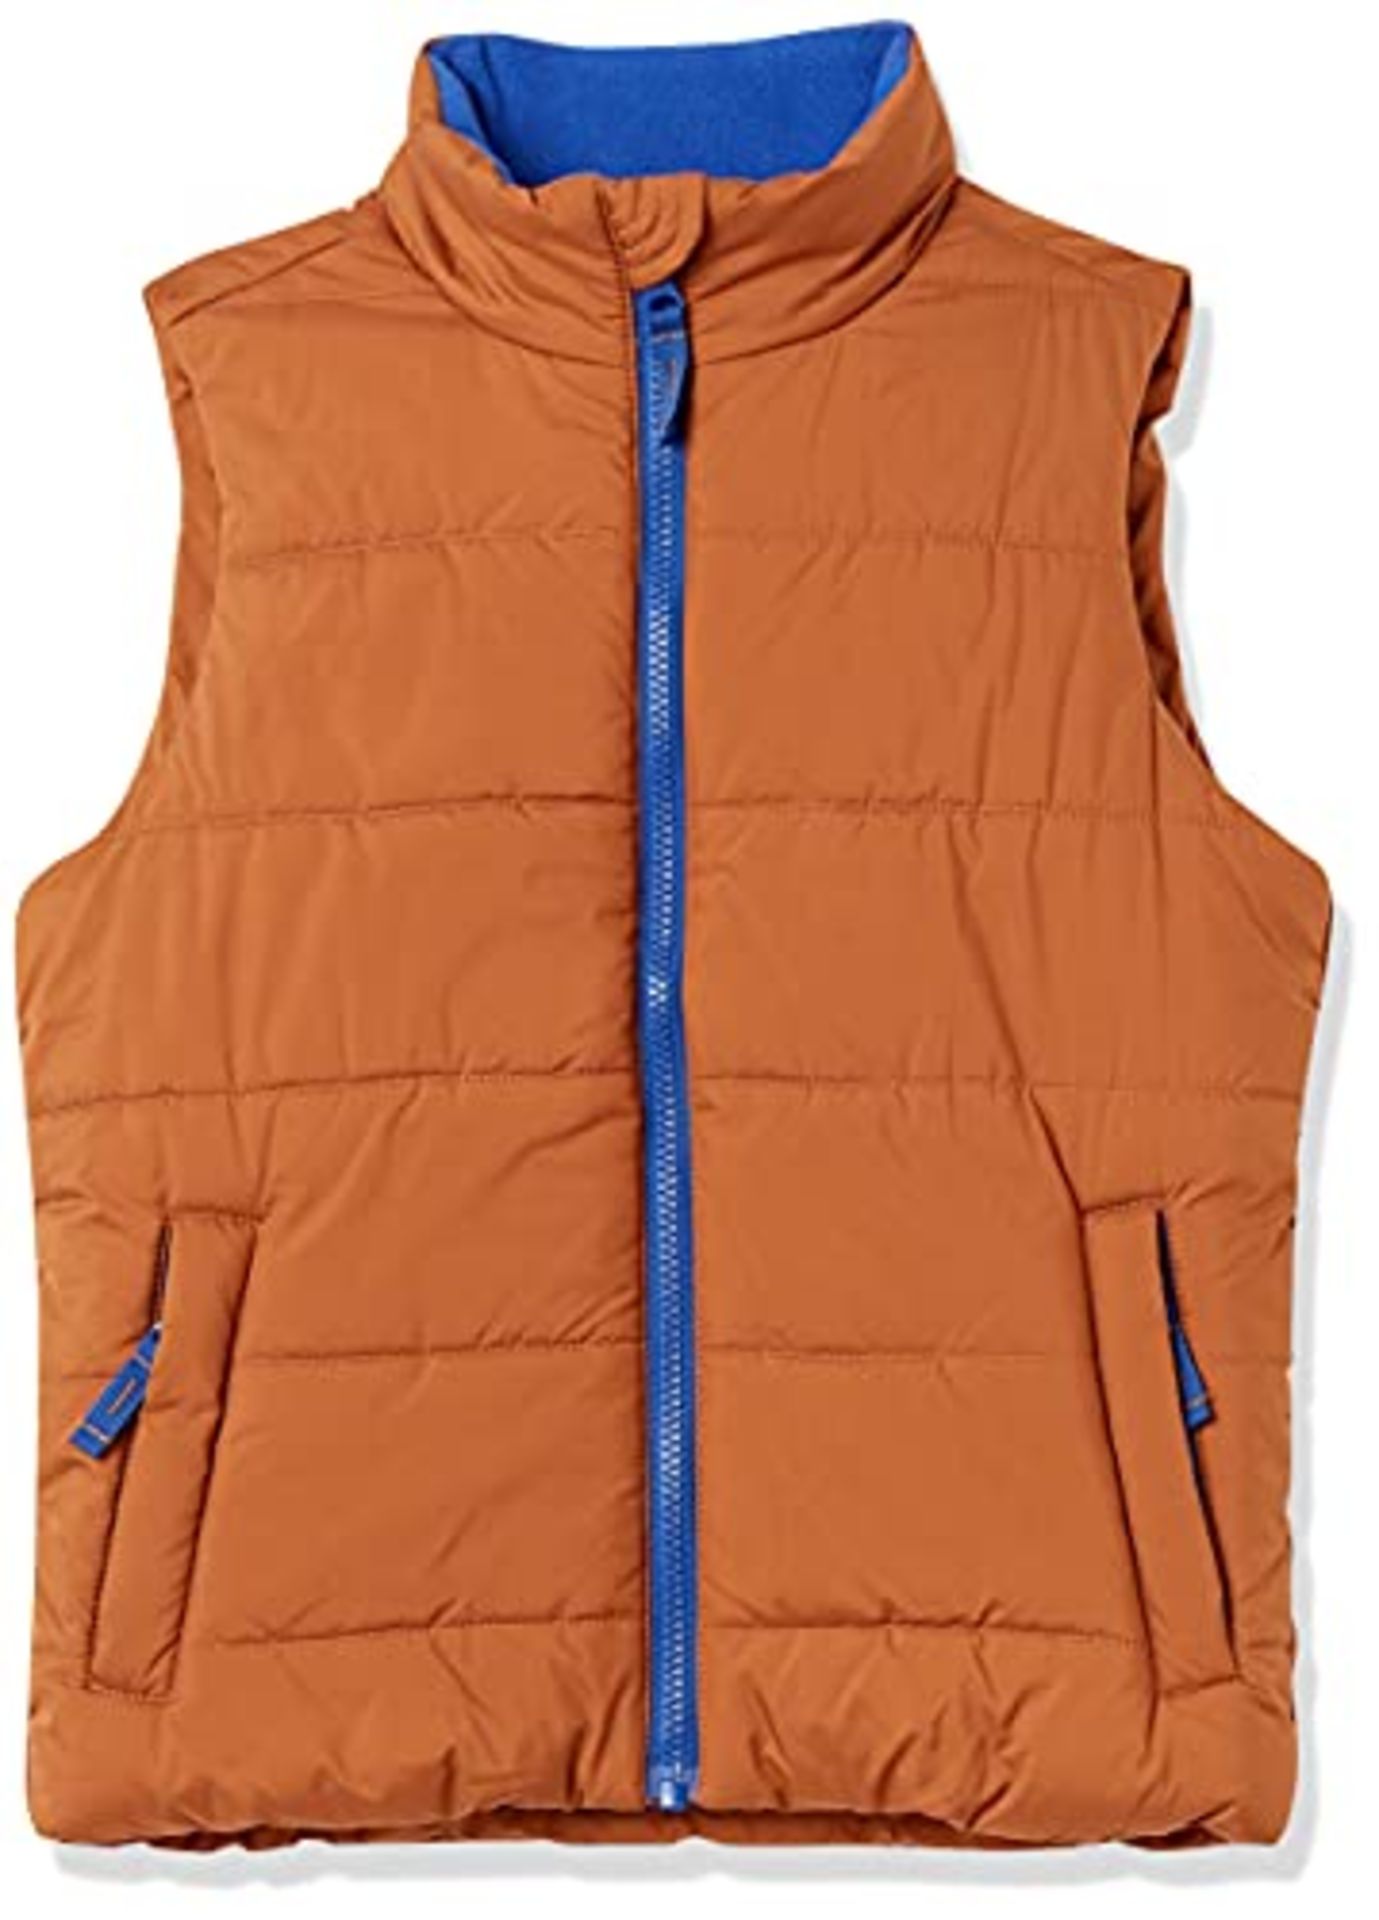 Amazon Essentials Boys' Heavy-Weight Puffer Jacket, Light Brown, 8 Years